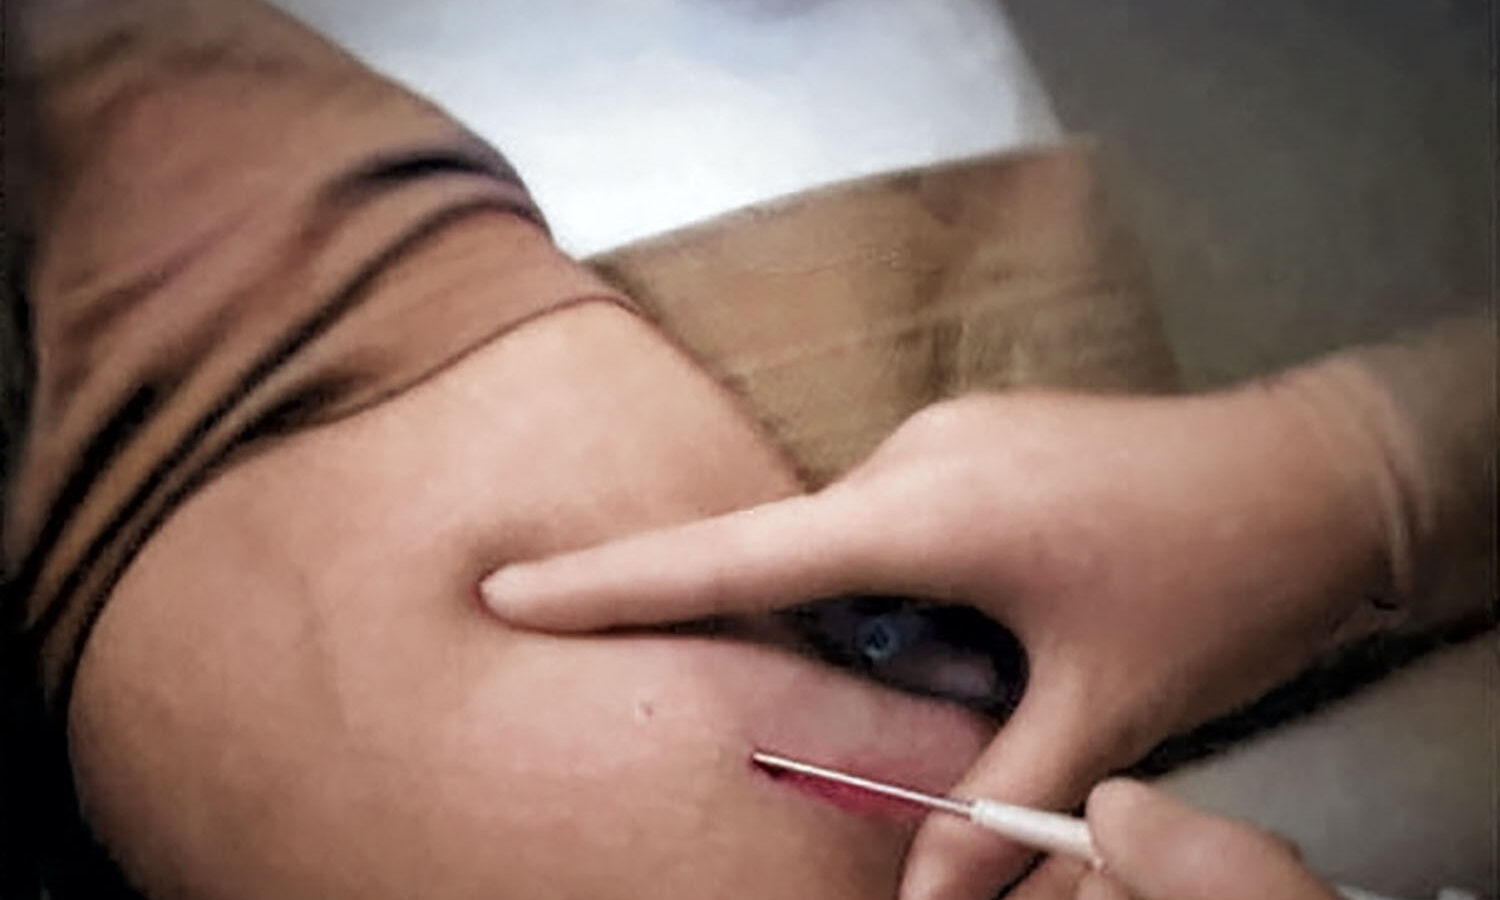 Arm with syringe inserted